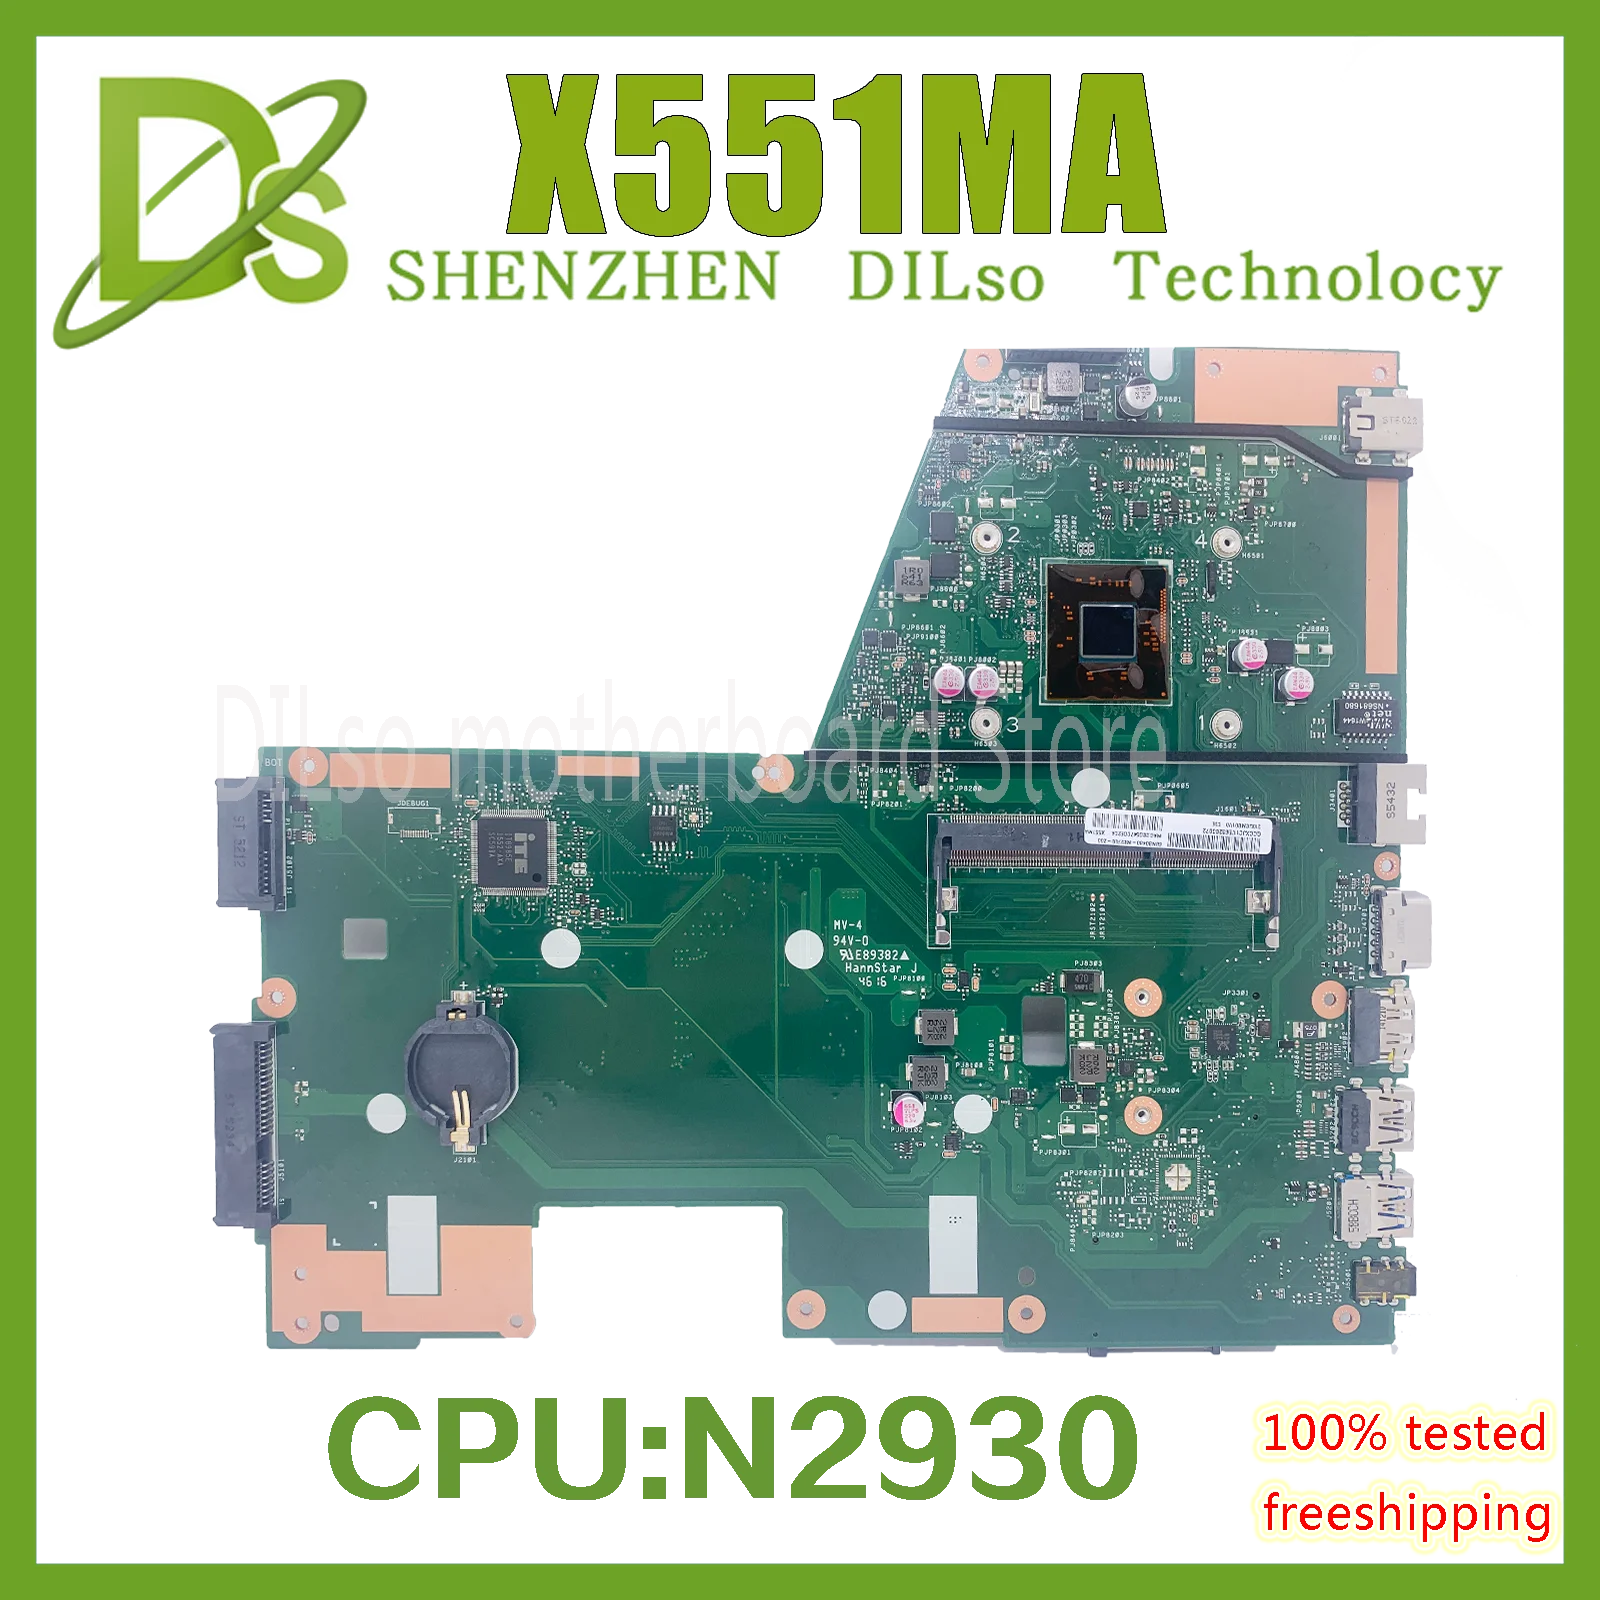 KEFU X551MA Notebook Mainboard For ASUS X551MA F551MA D550M Motherboard With N2930 N2840 N3530 N3540 CPU 100% Fully Tested